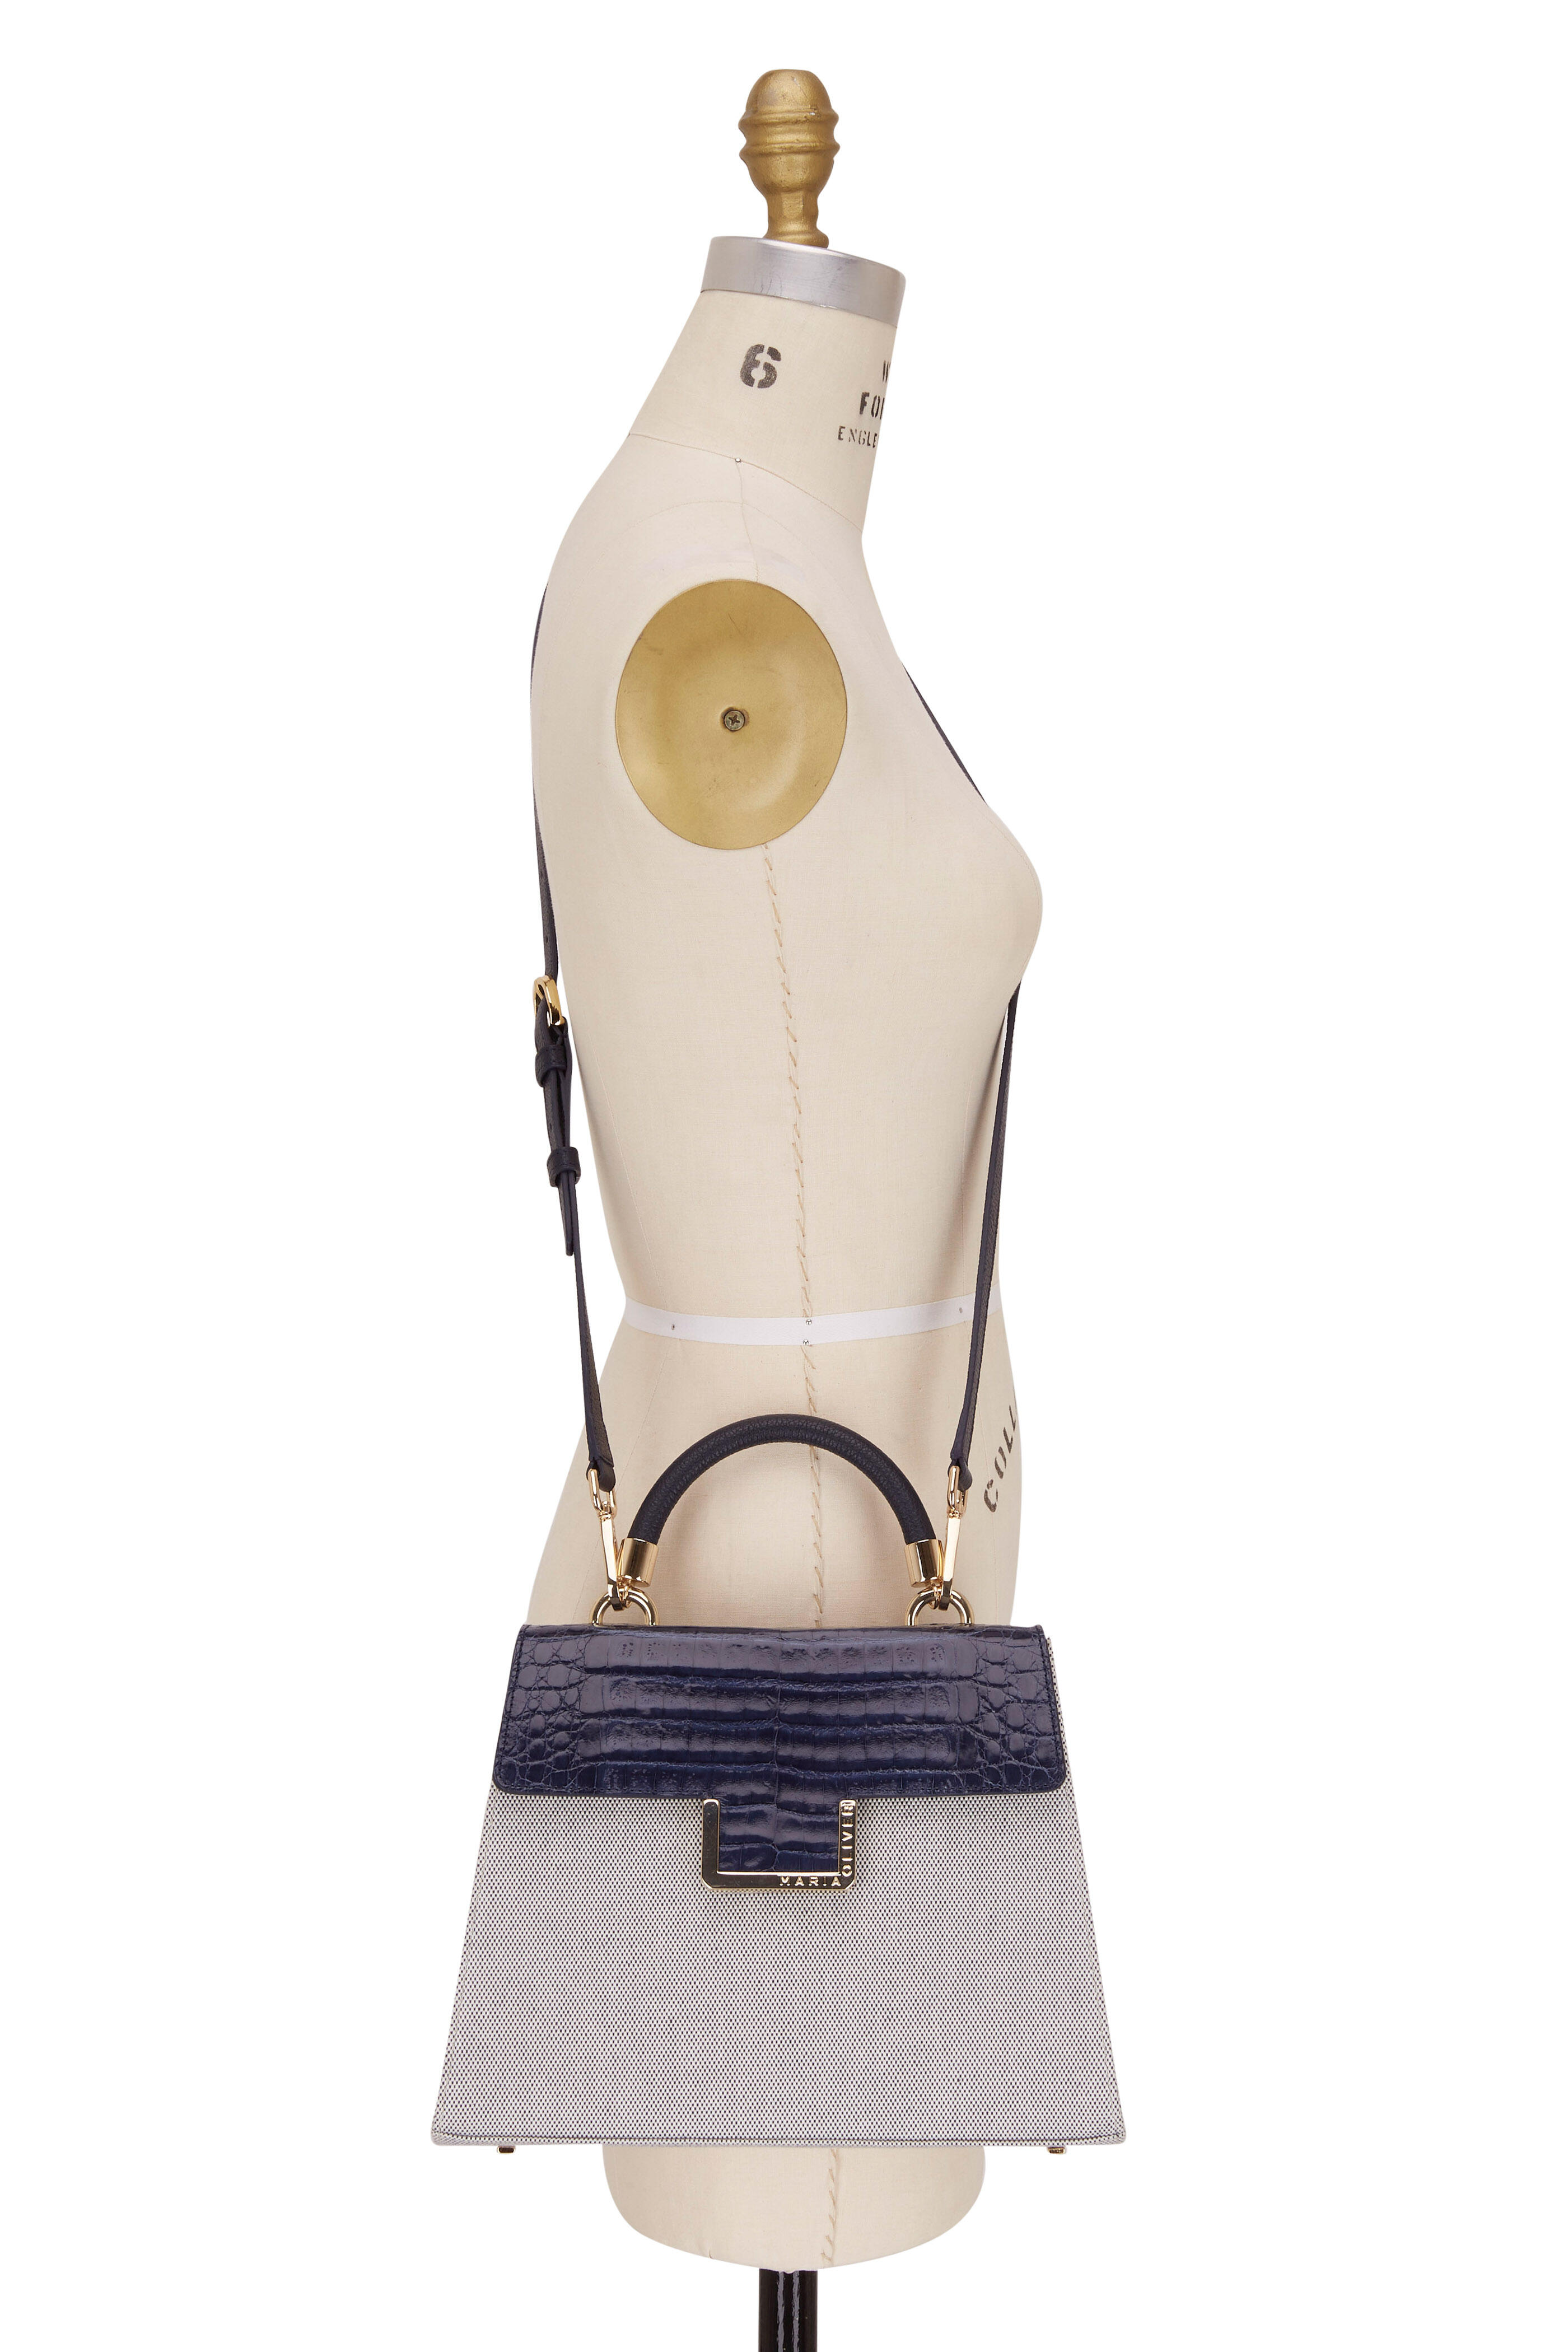 Valentino Garavani Women's Small Vsling Poudre Grain Calfskin Handbag | by Mitchell Stores